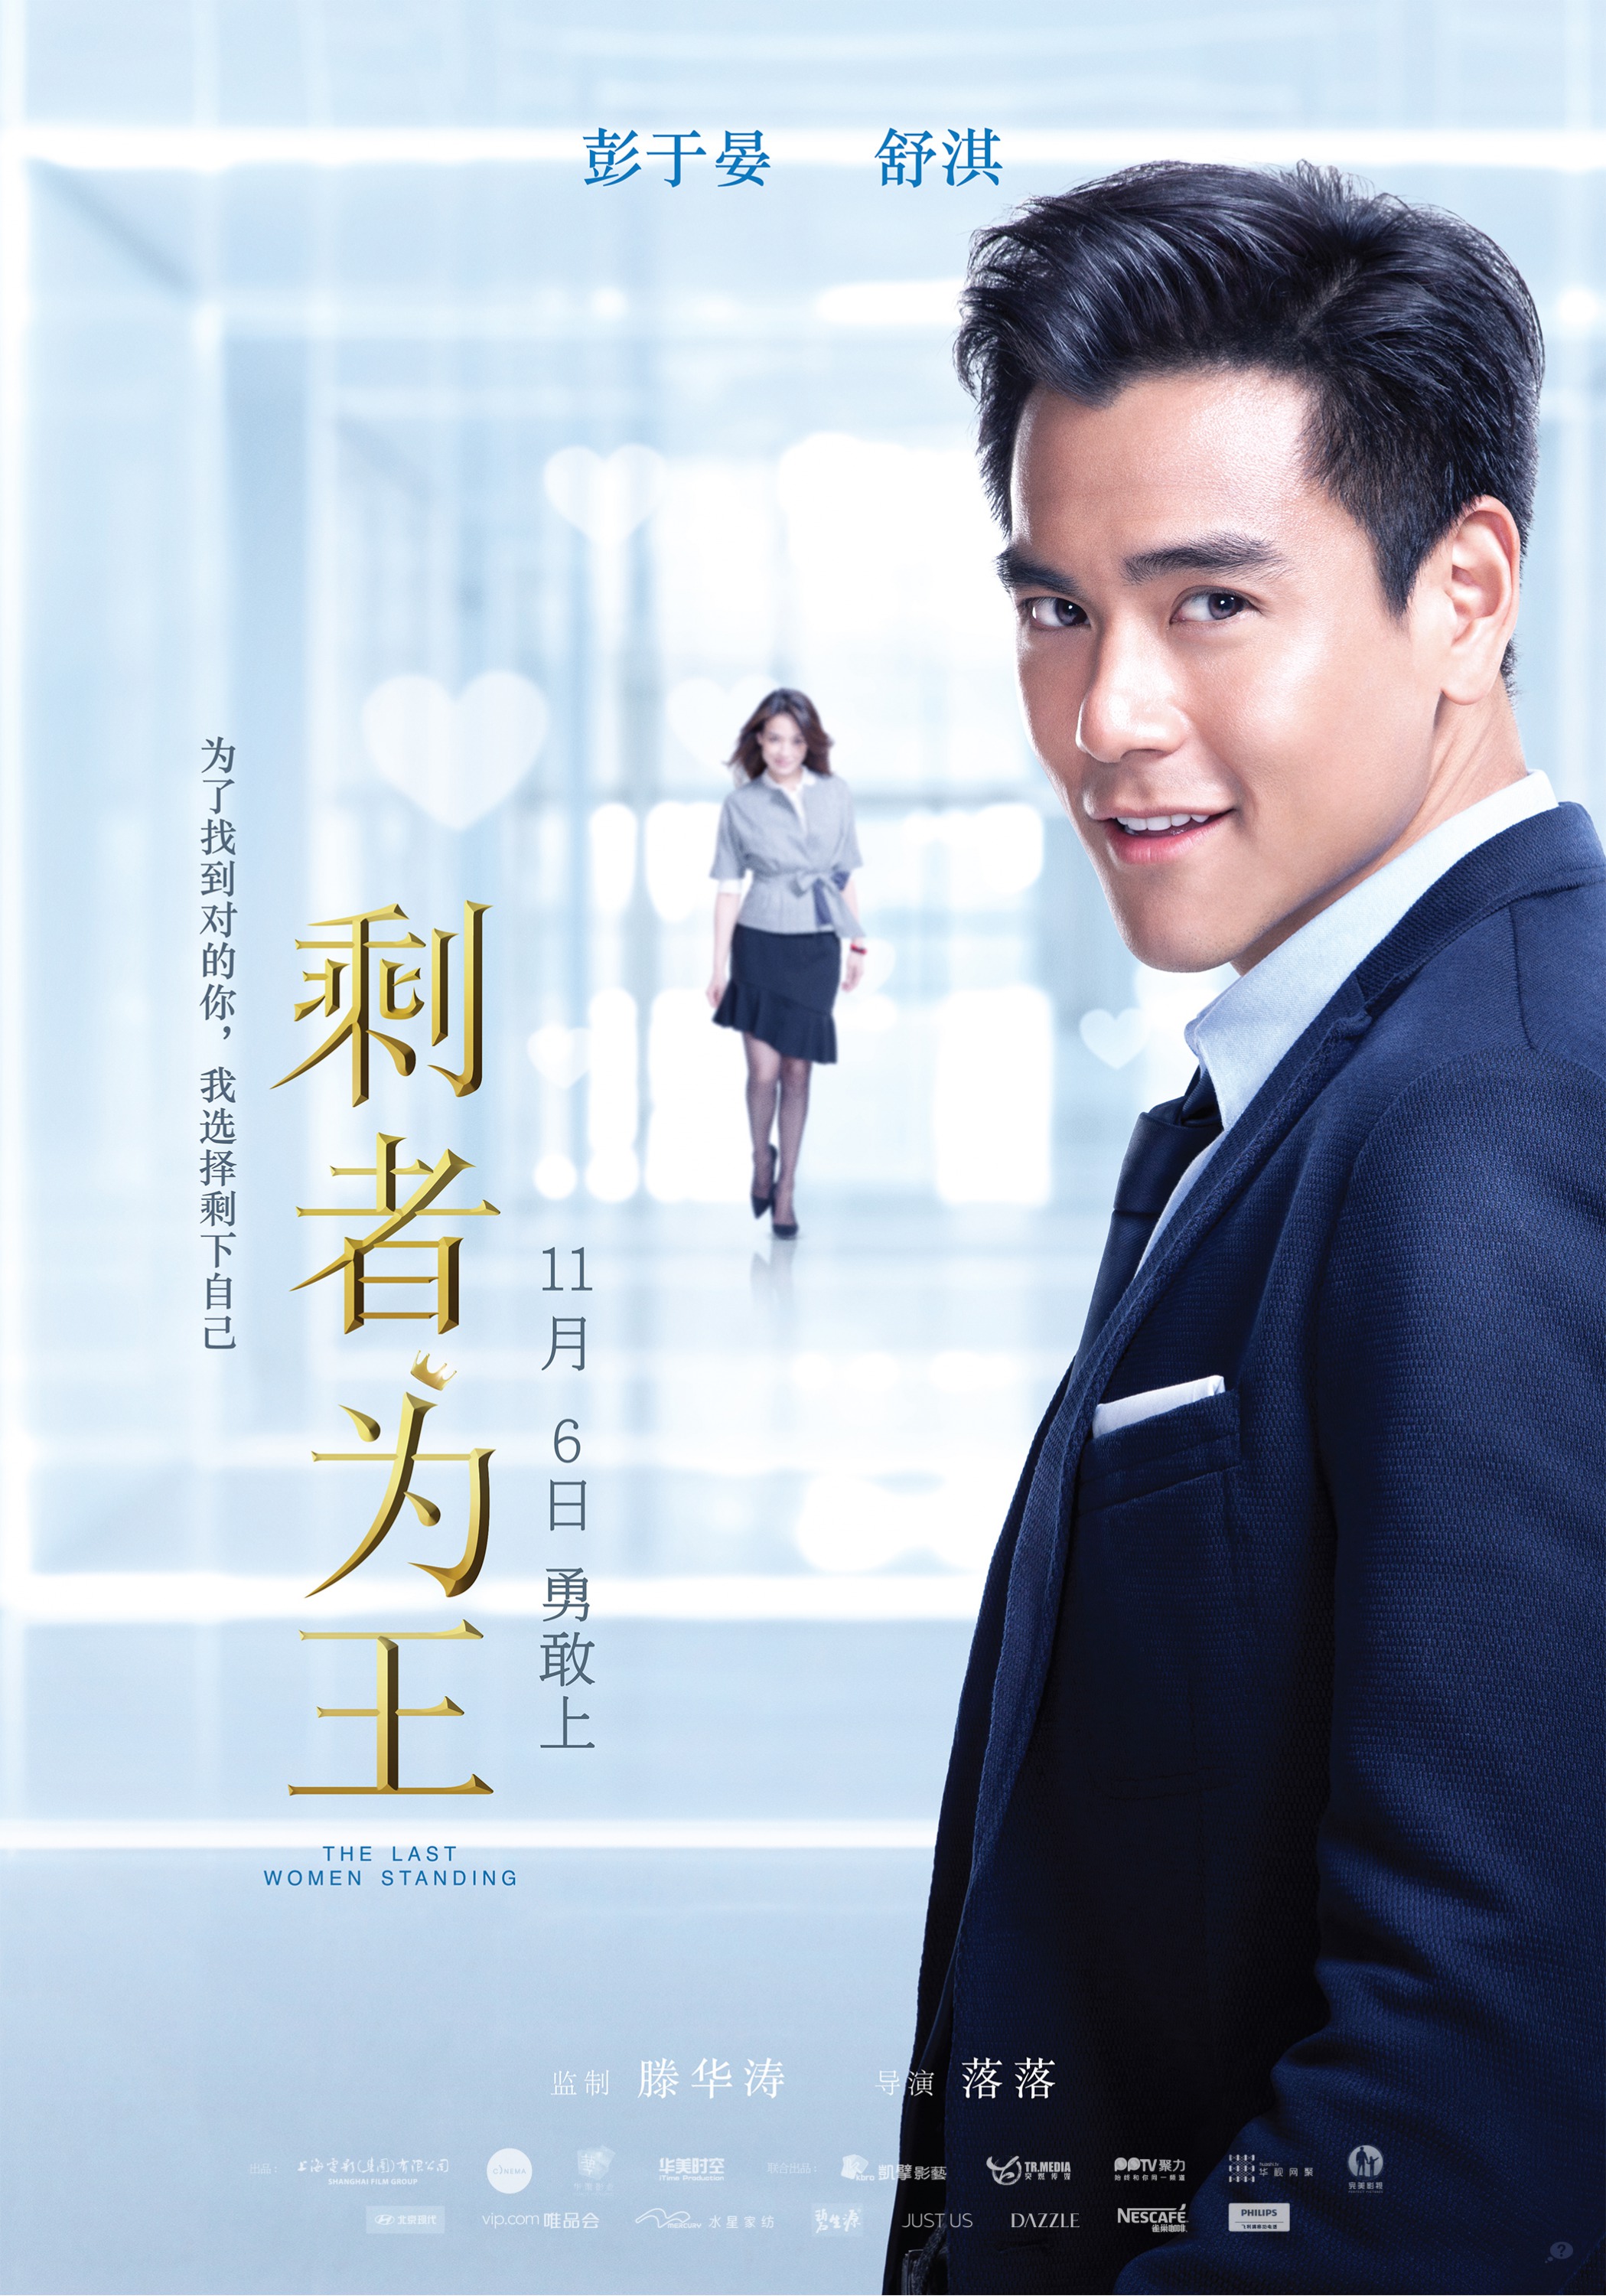 Mega Sized Movie Poster Image for Sheng zhe wei wang (#1 of 3)